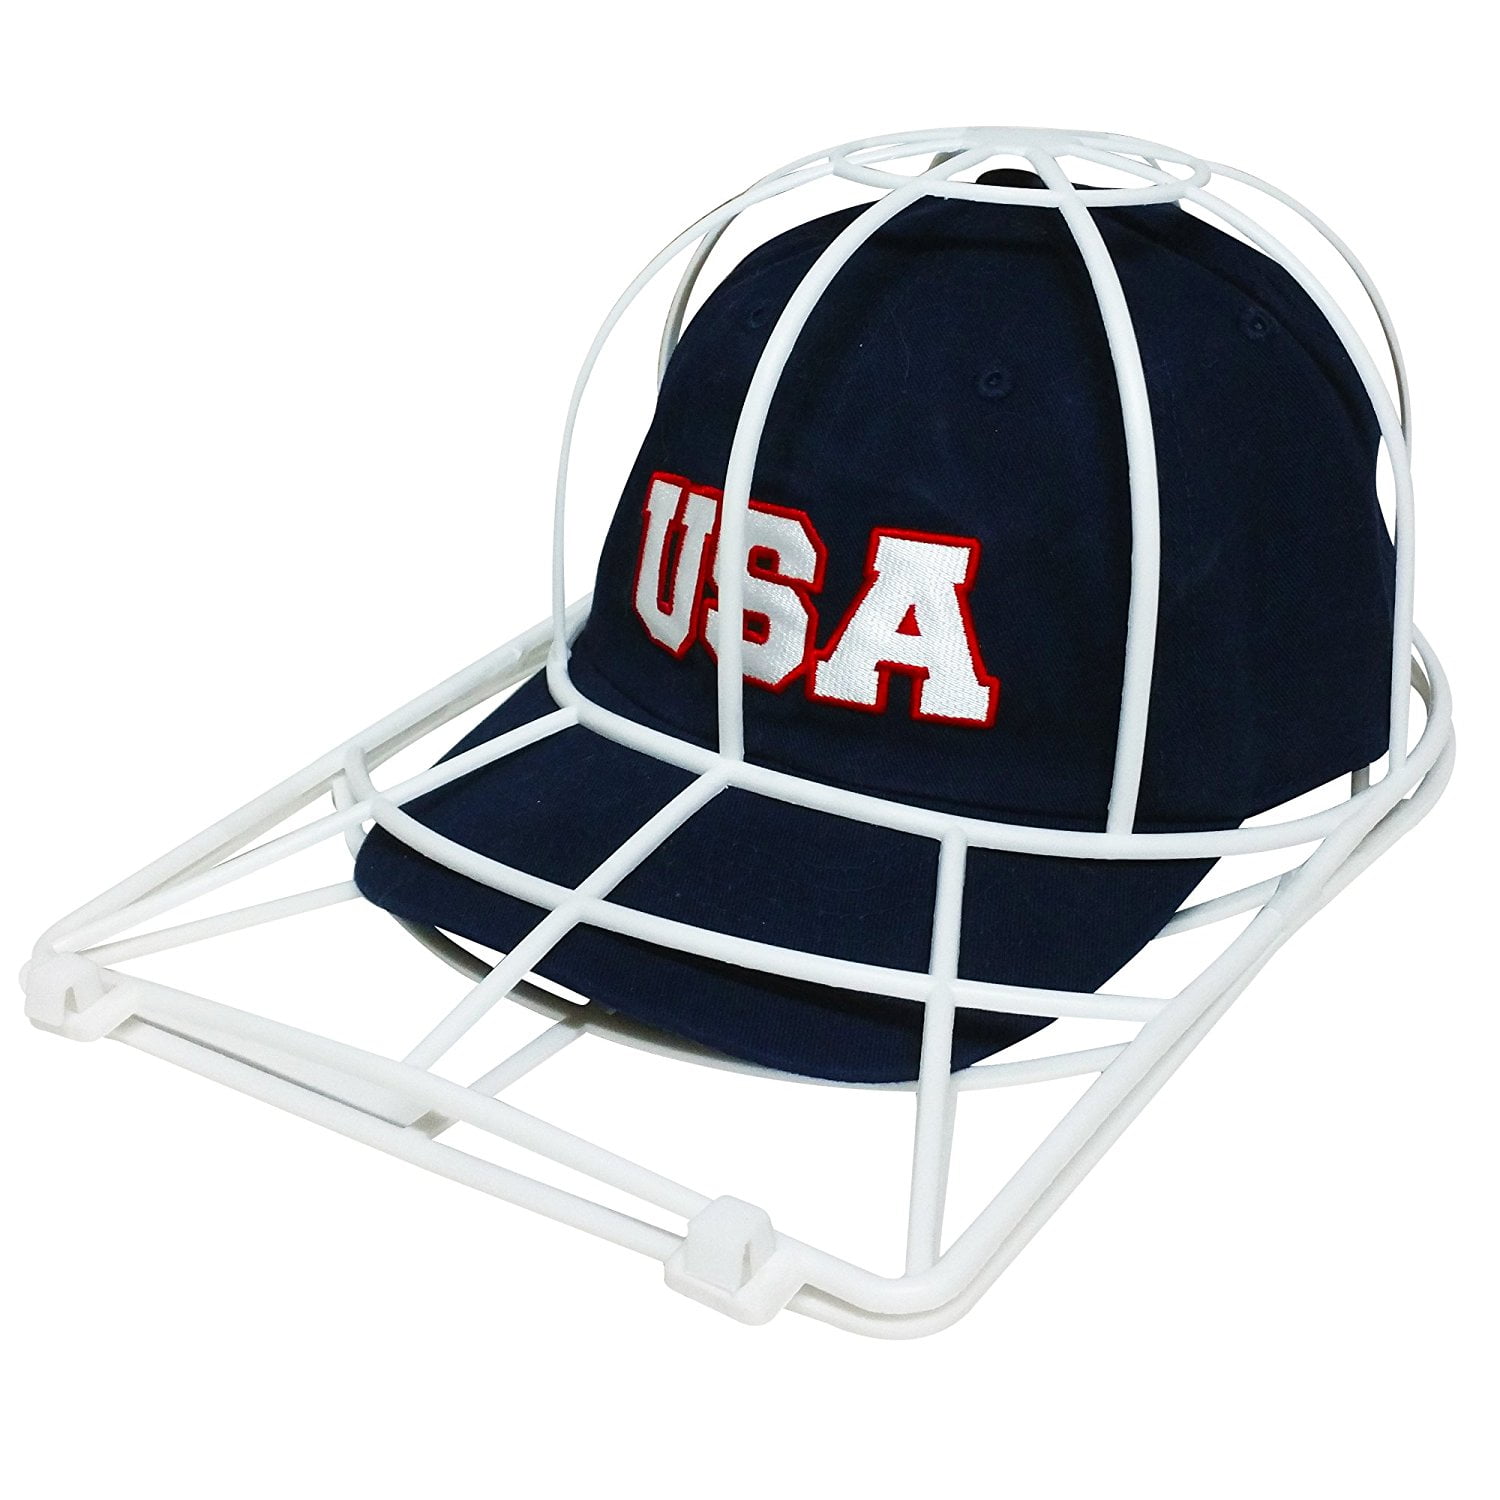 Baseball Cap Washer Protective Cage Hat Rack Holder Safe For Washing Machine 